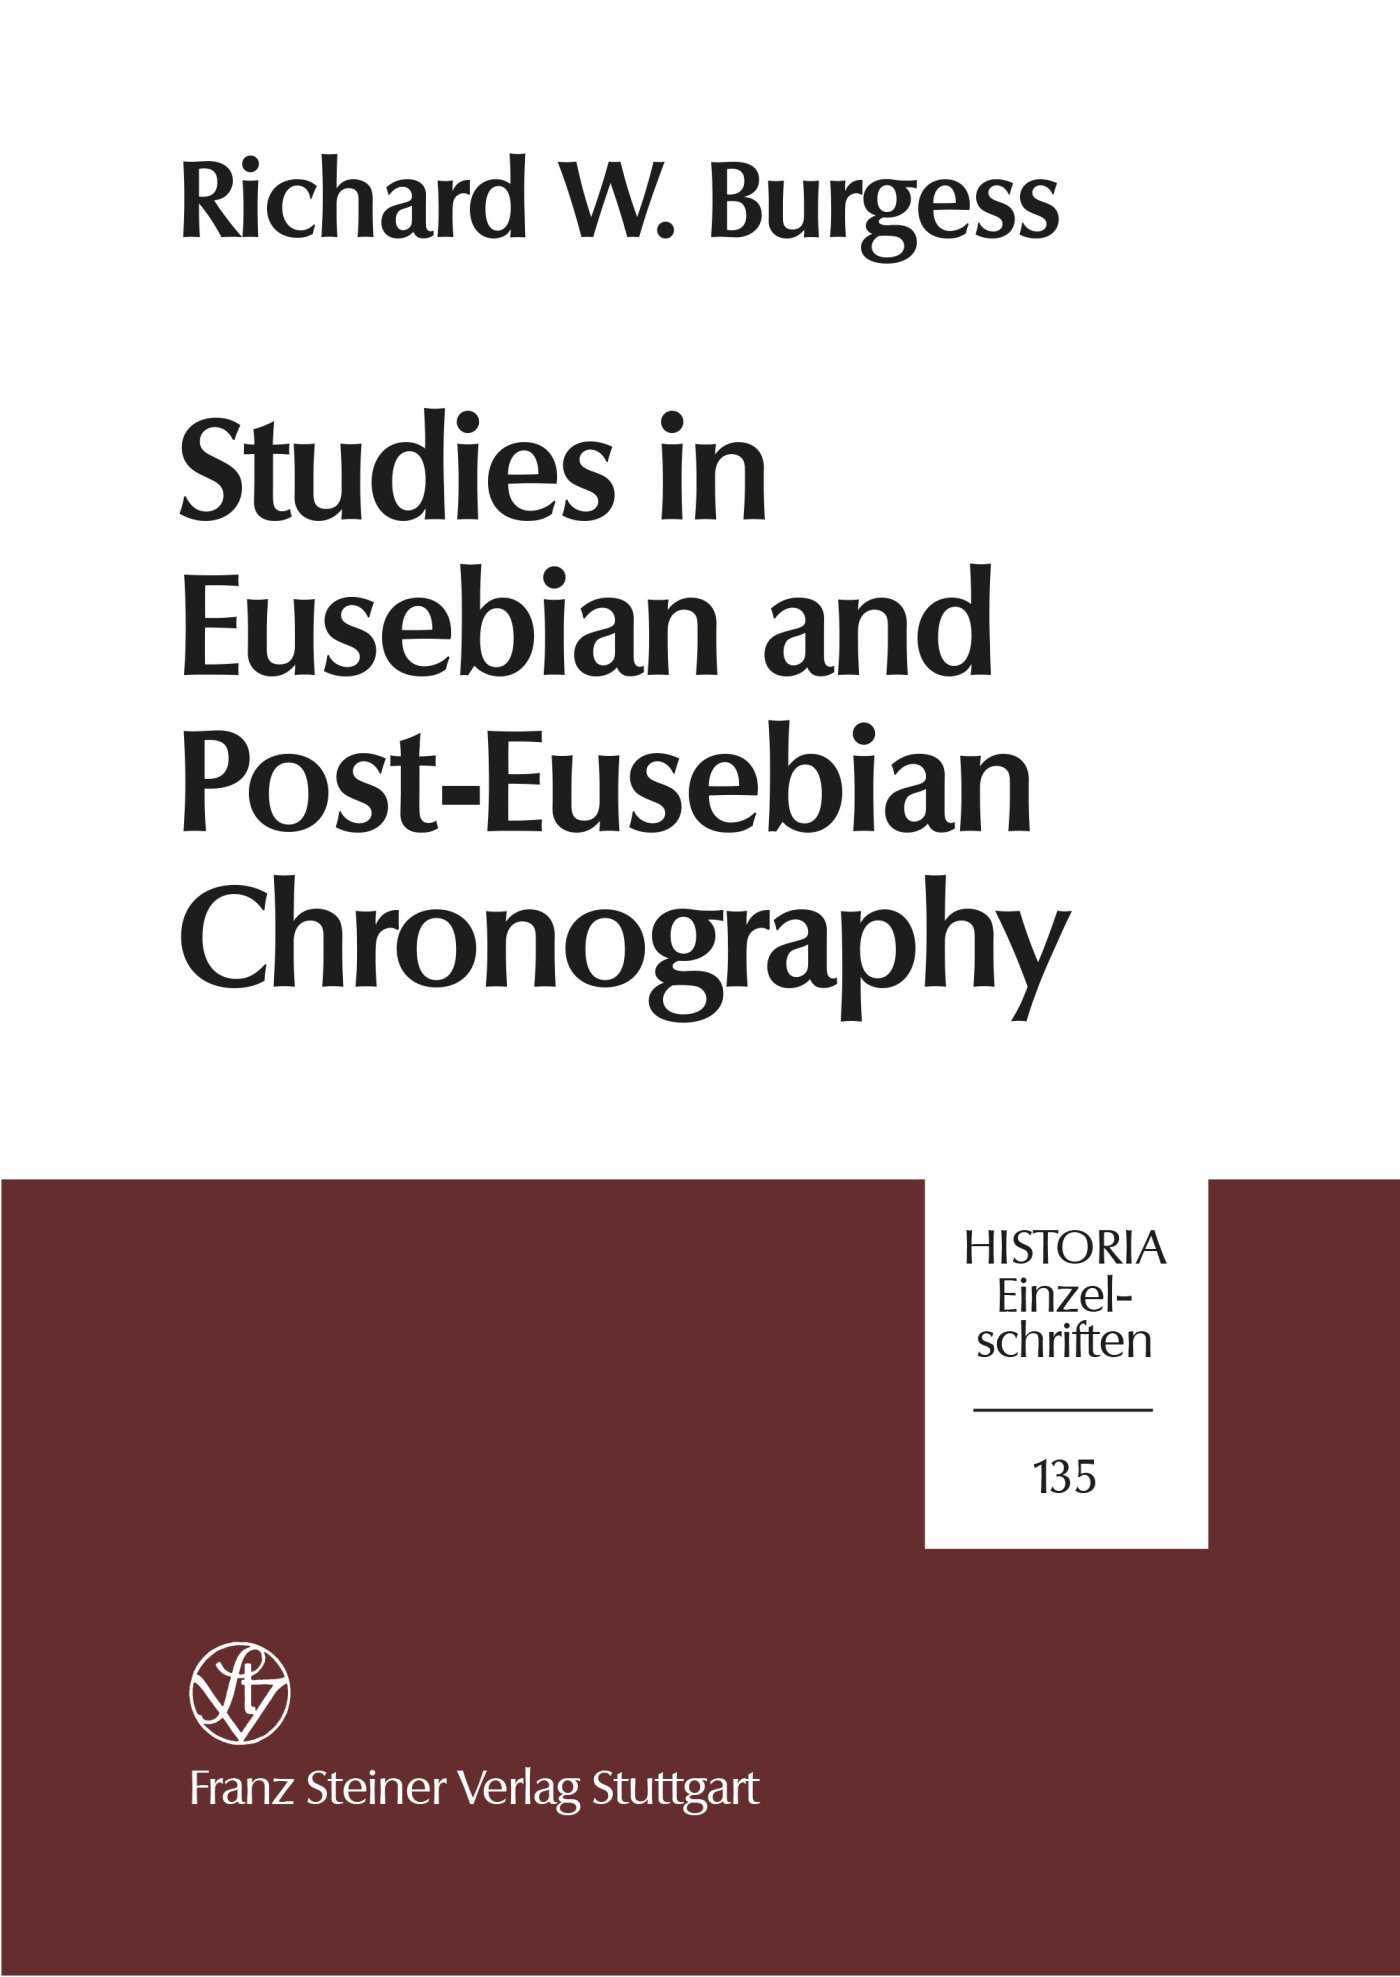 Studies in Eusebian and Post-Eusebian Chronography